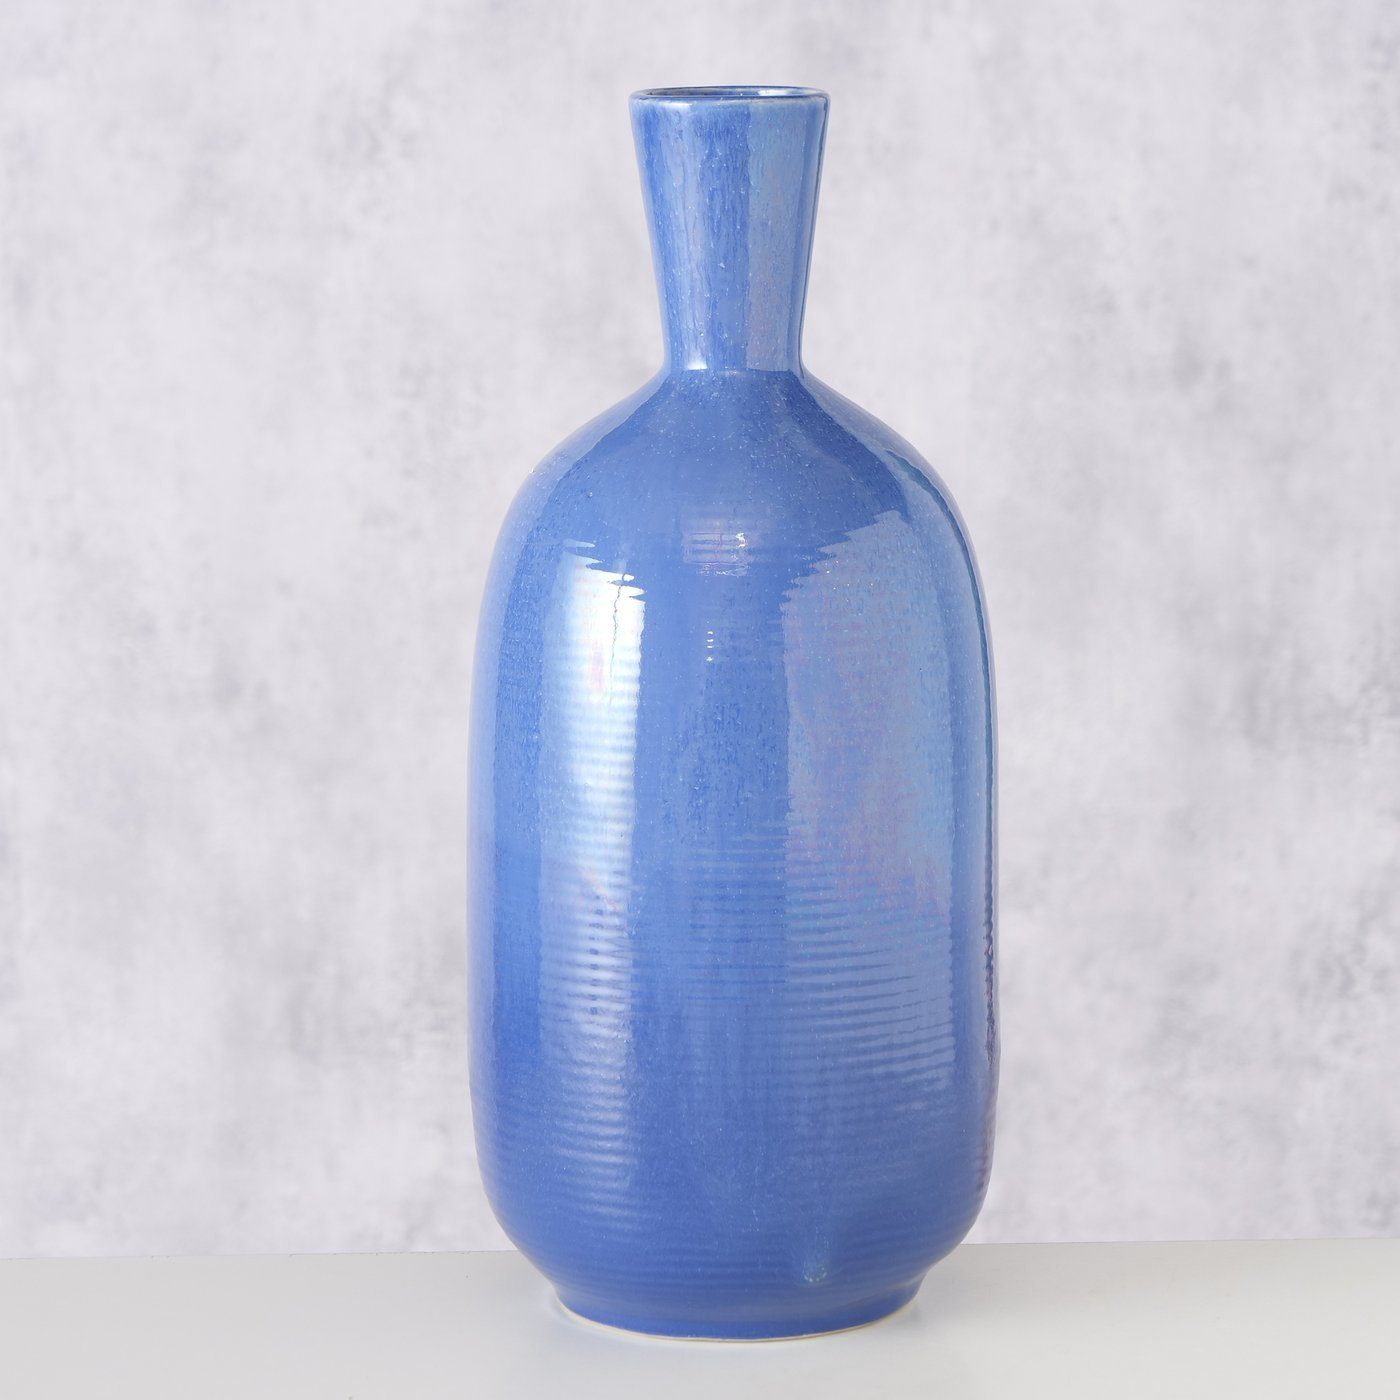 BOLTZE Dekovase "Elikia" aus Keramik in blau H37cm, Vase